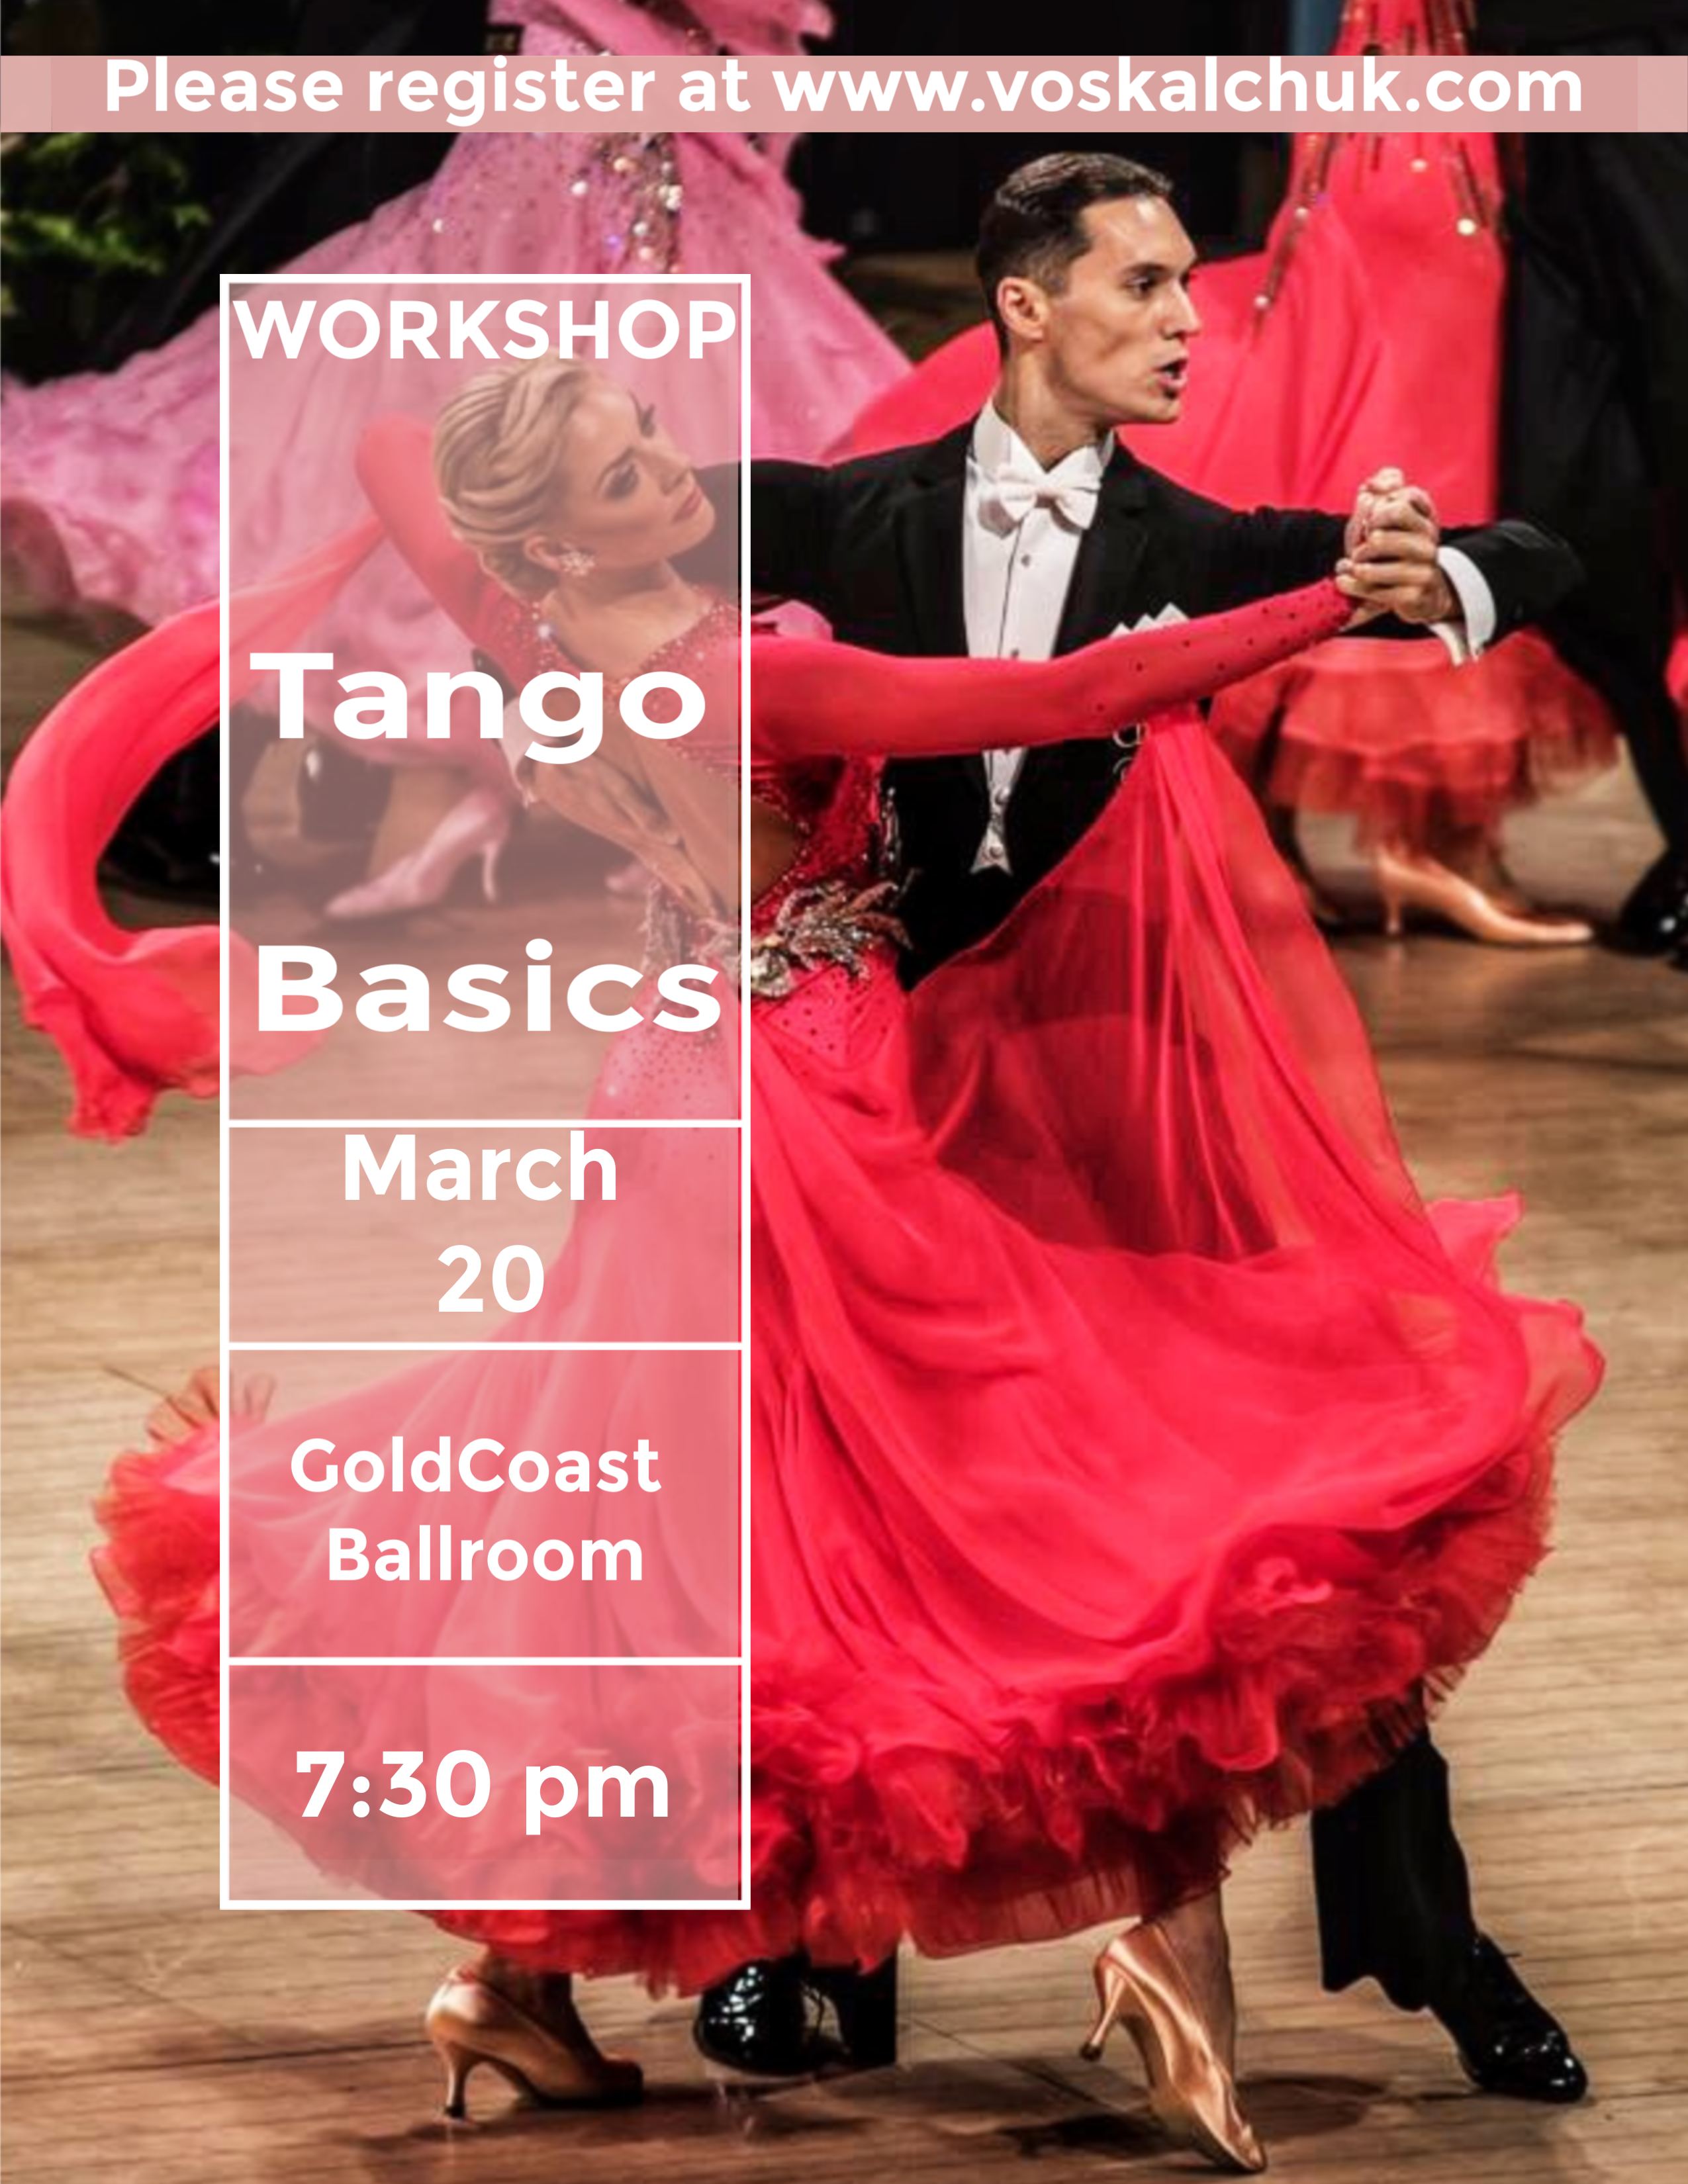 Alexander & Veronika Voskalchuk - March 20, 2019  - 7:30 PM Workshop - Tango Basics